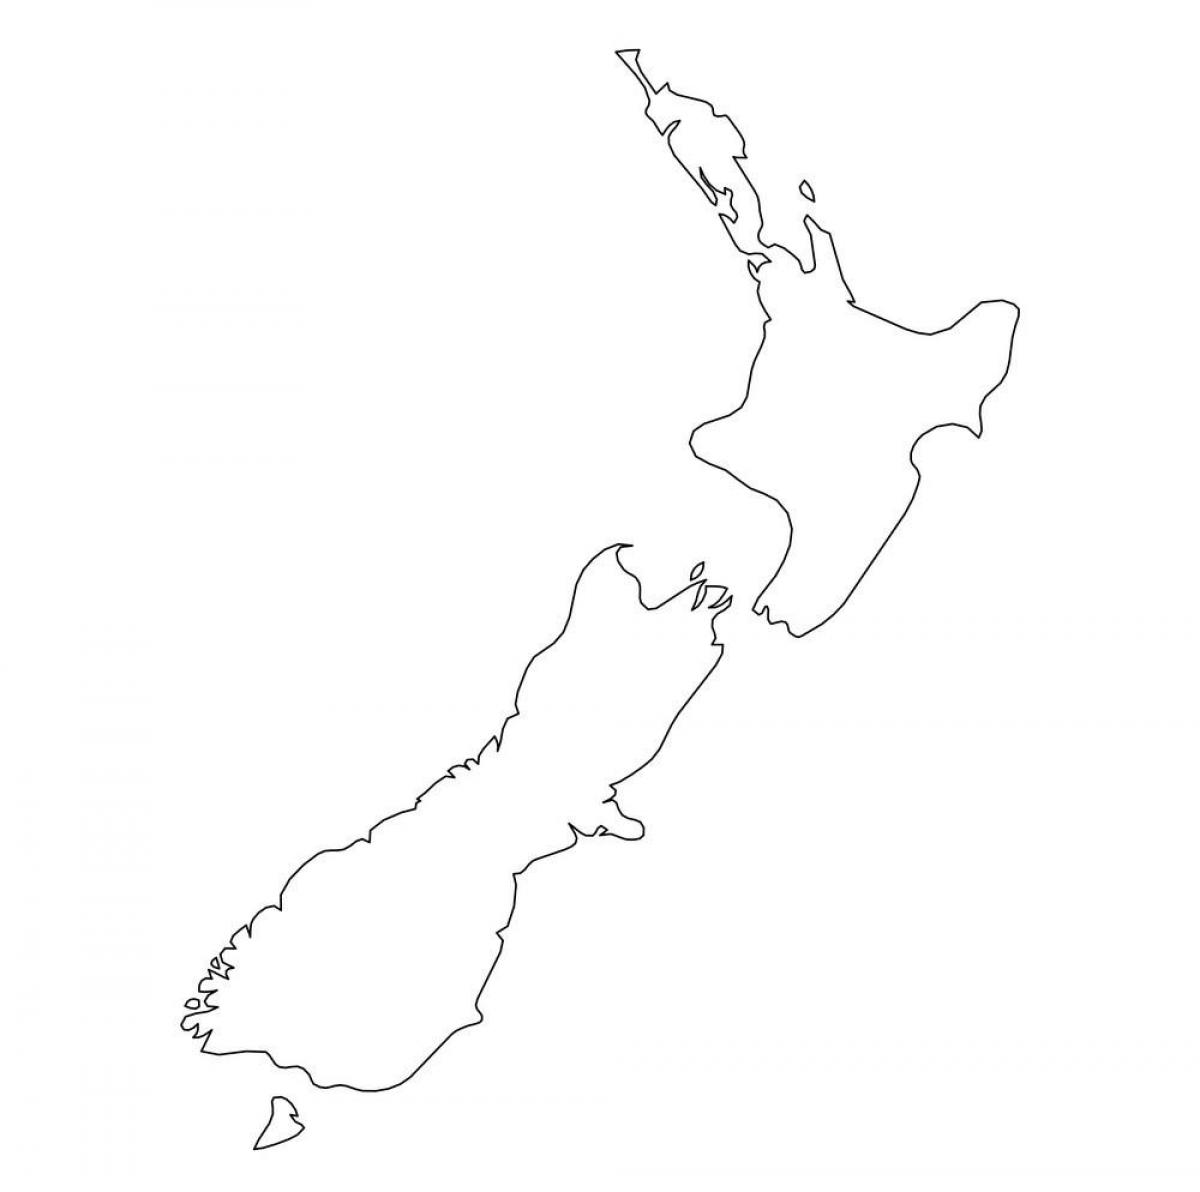 Mapa konturowa Nowej Zelandii